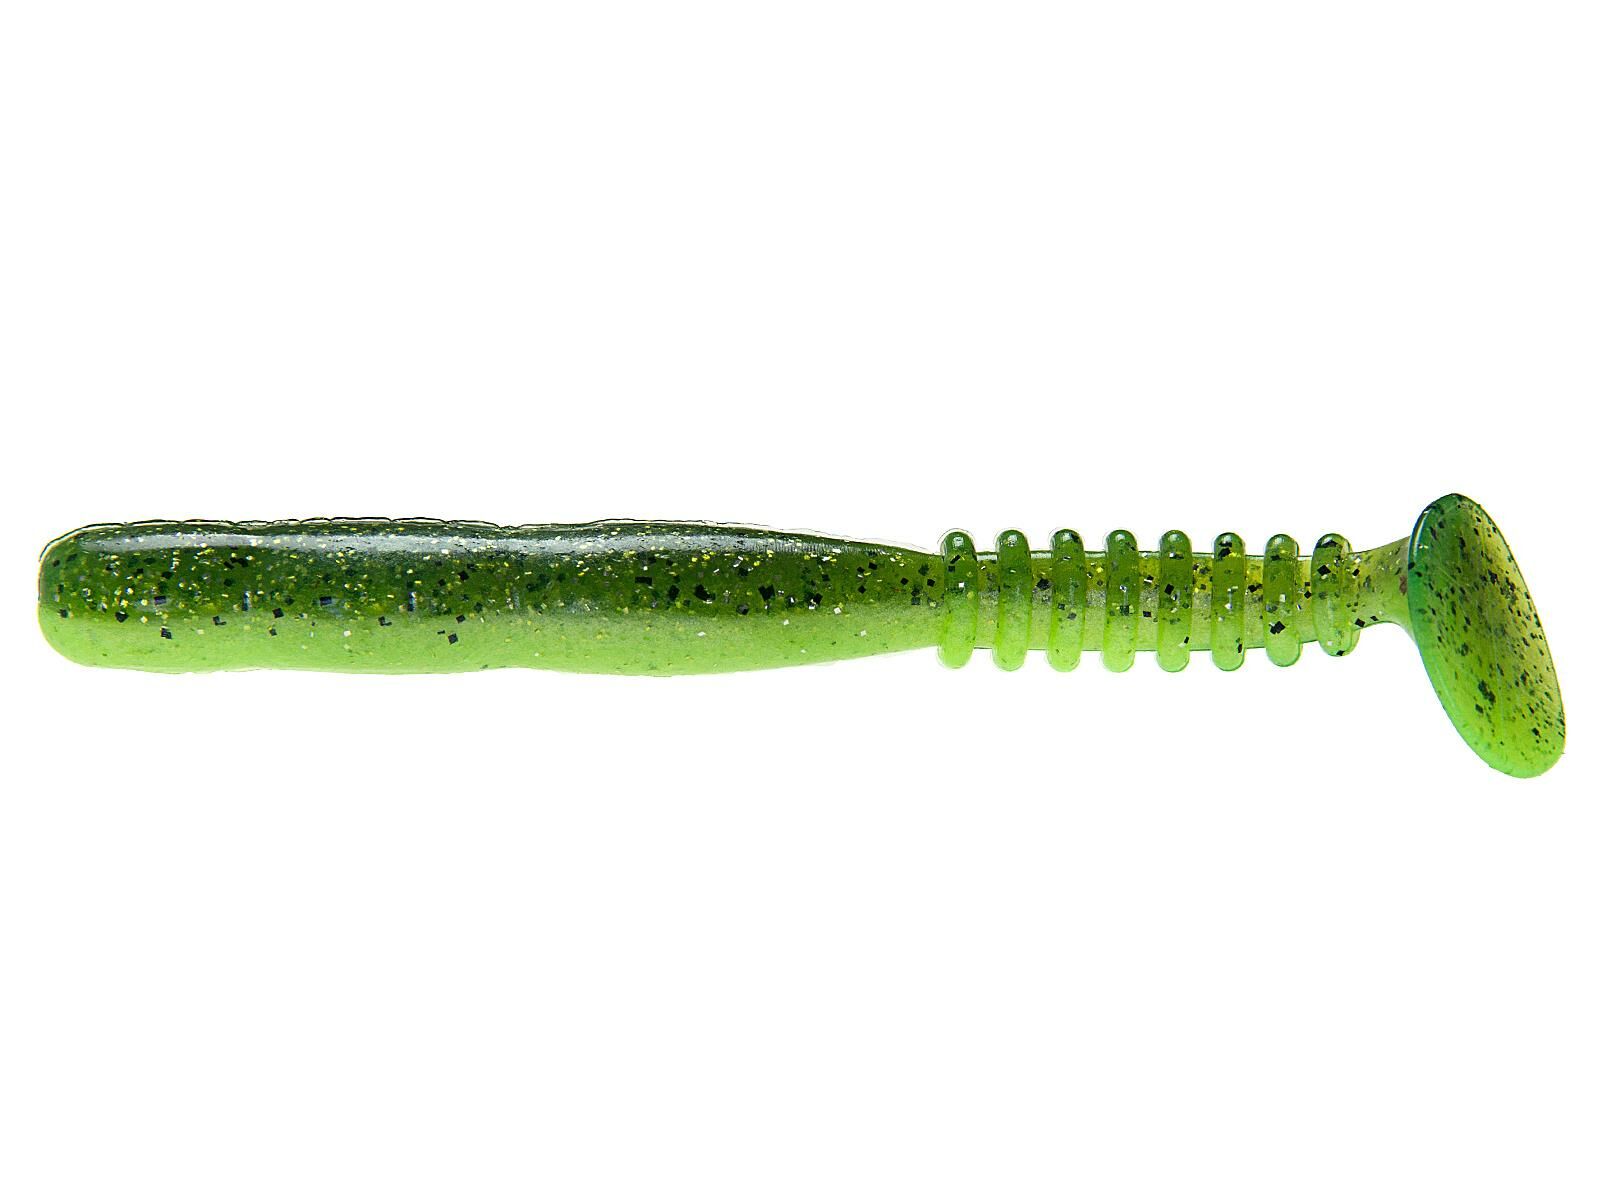 3.25" FAT Rockvibe Shad - Chartreuse Baitfish